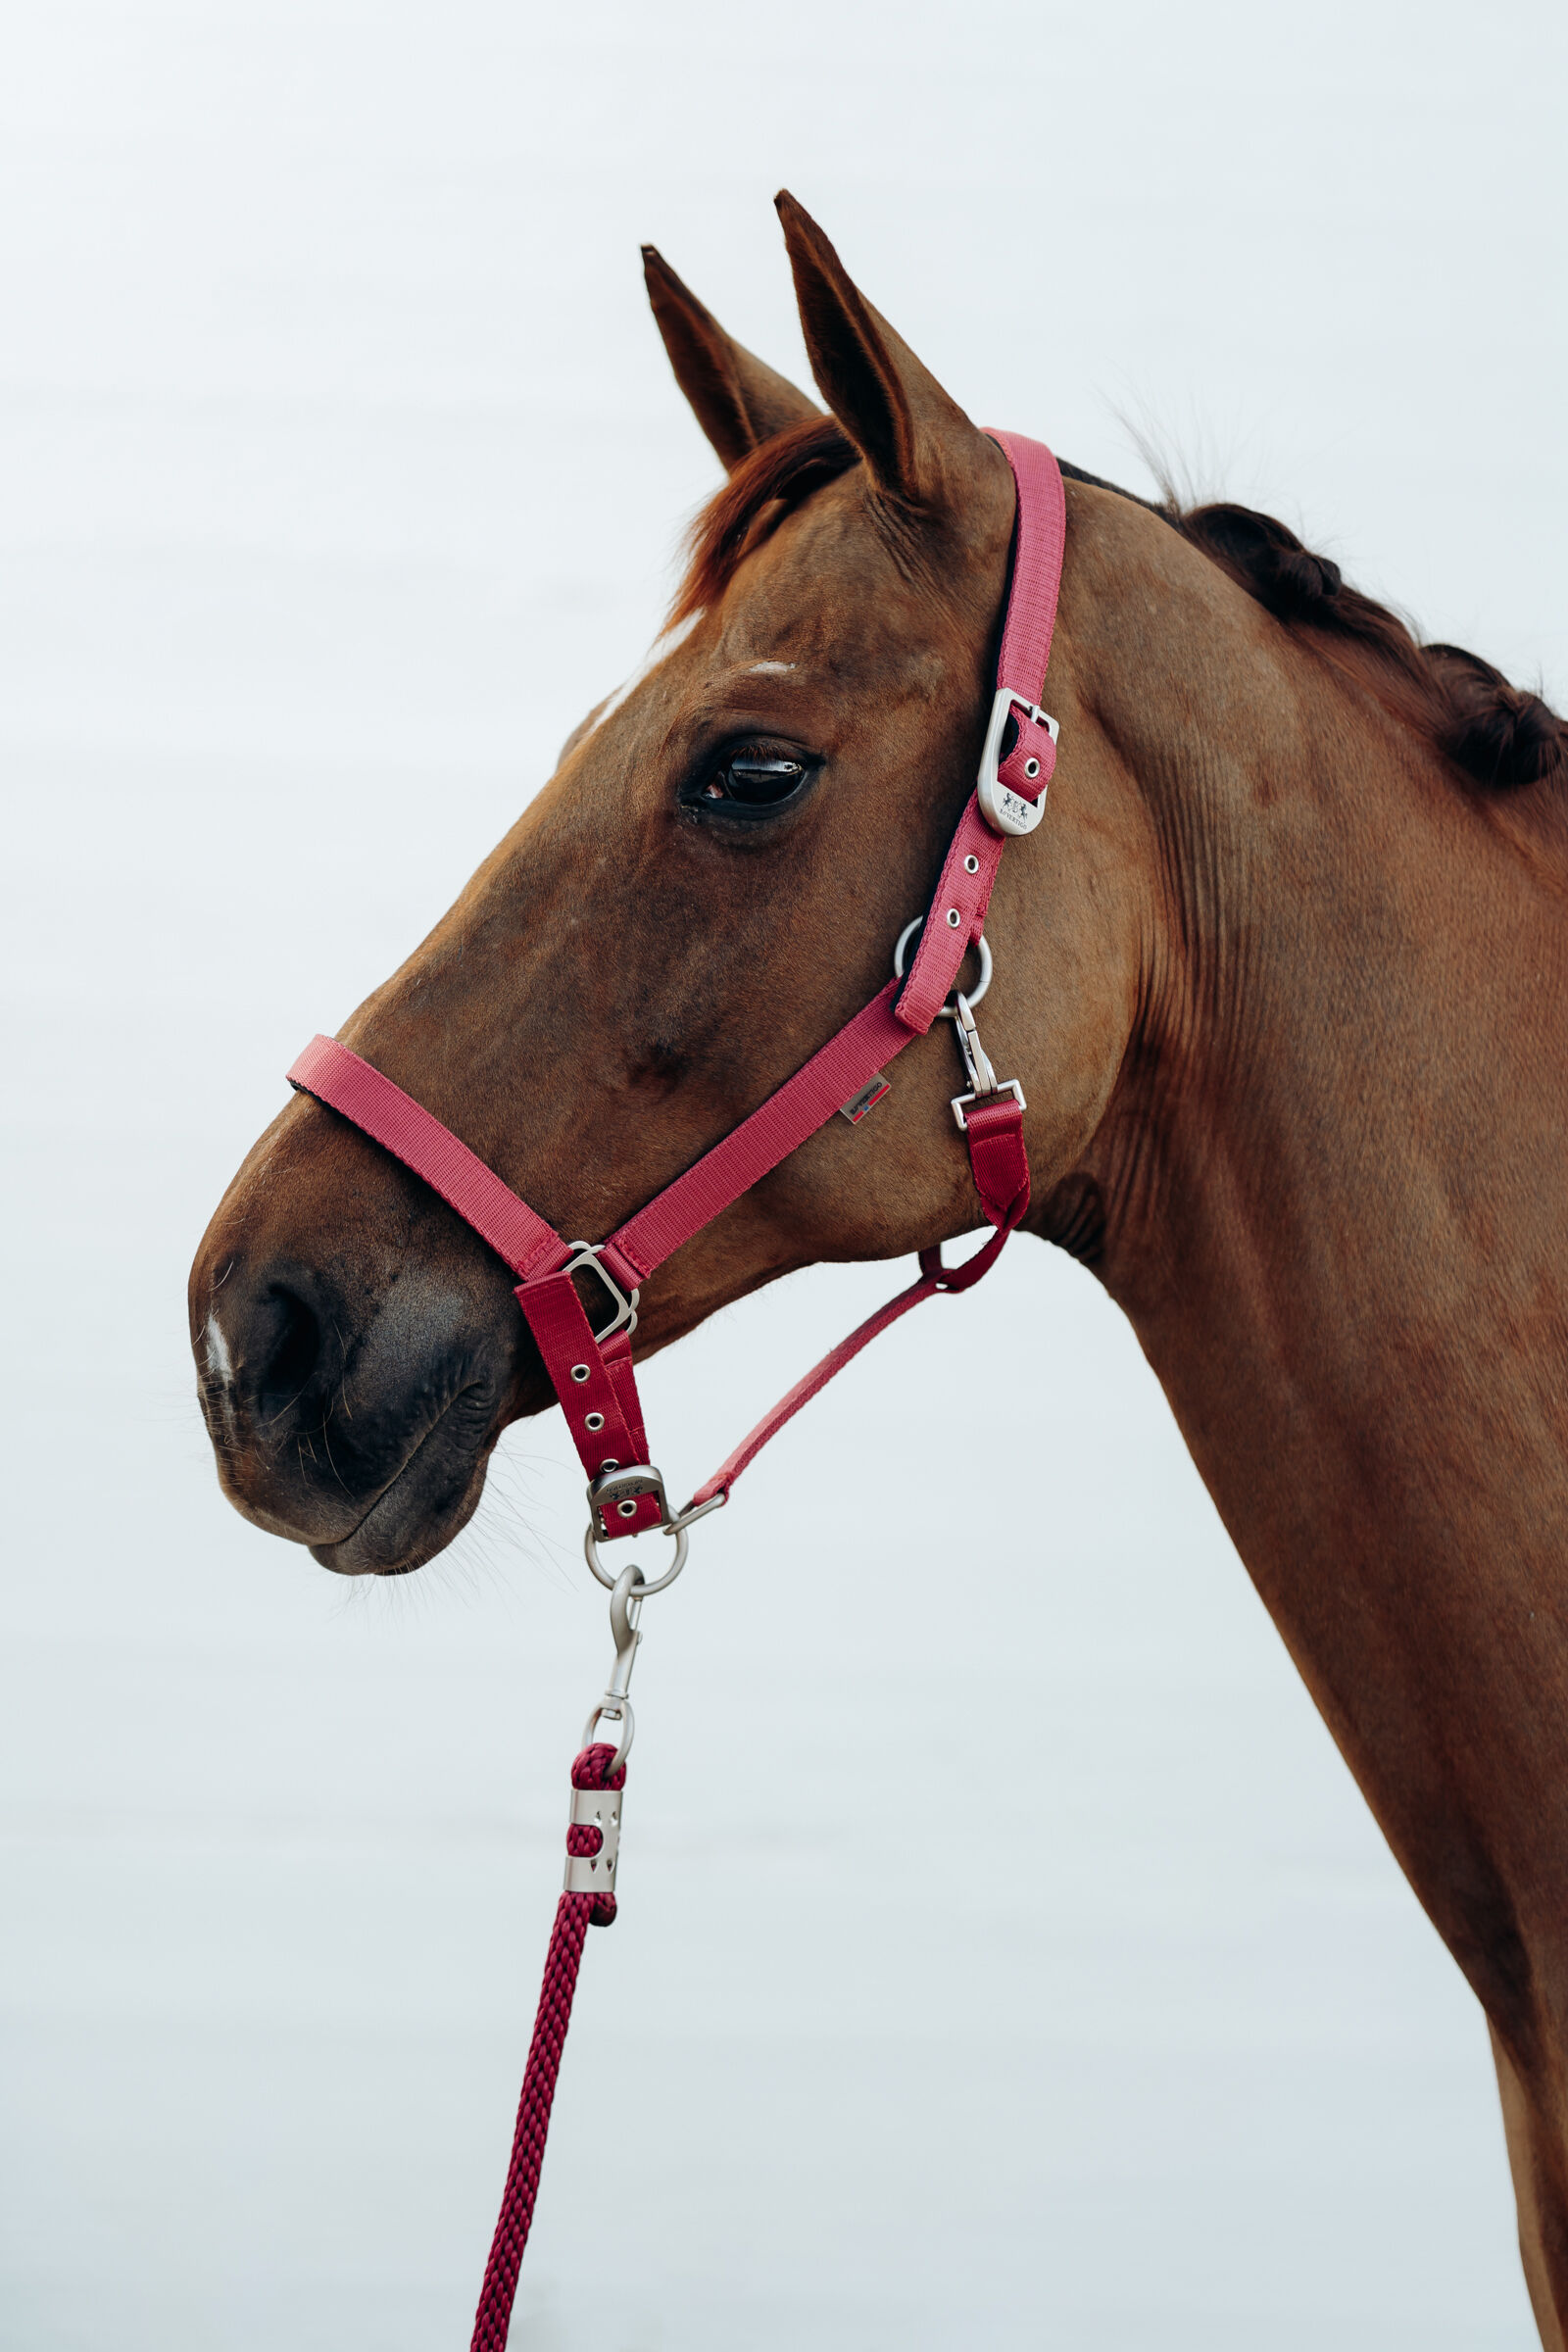 Horse Pressure Headcollar Natrual Horsemanship Two-Tone Rope Training Halter